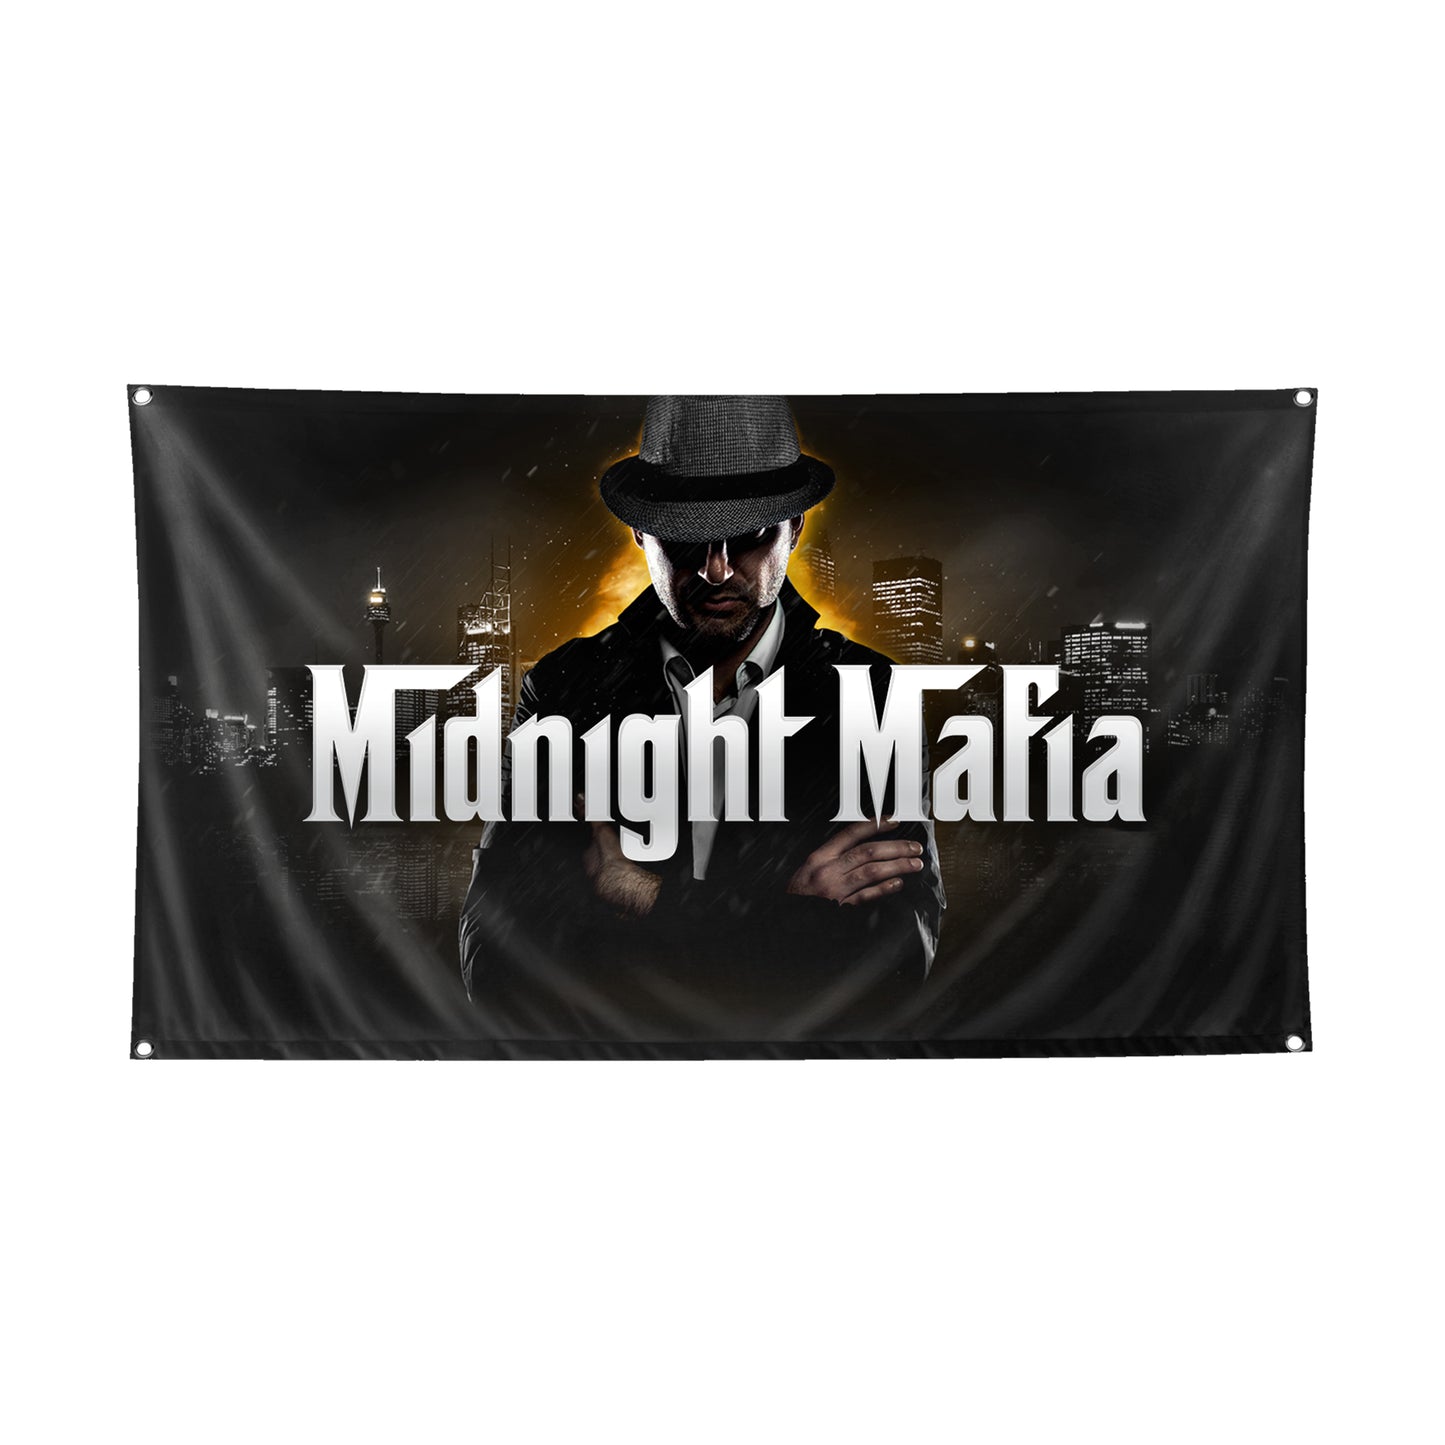 Midnight Mafia 2016 Flag